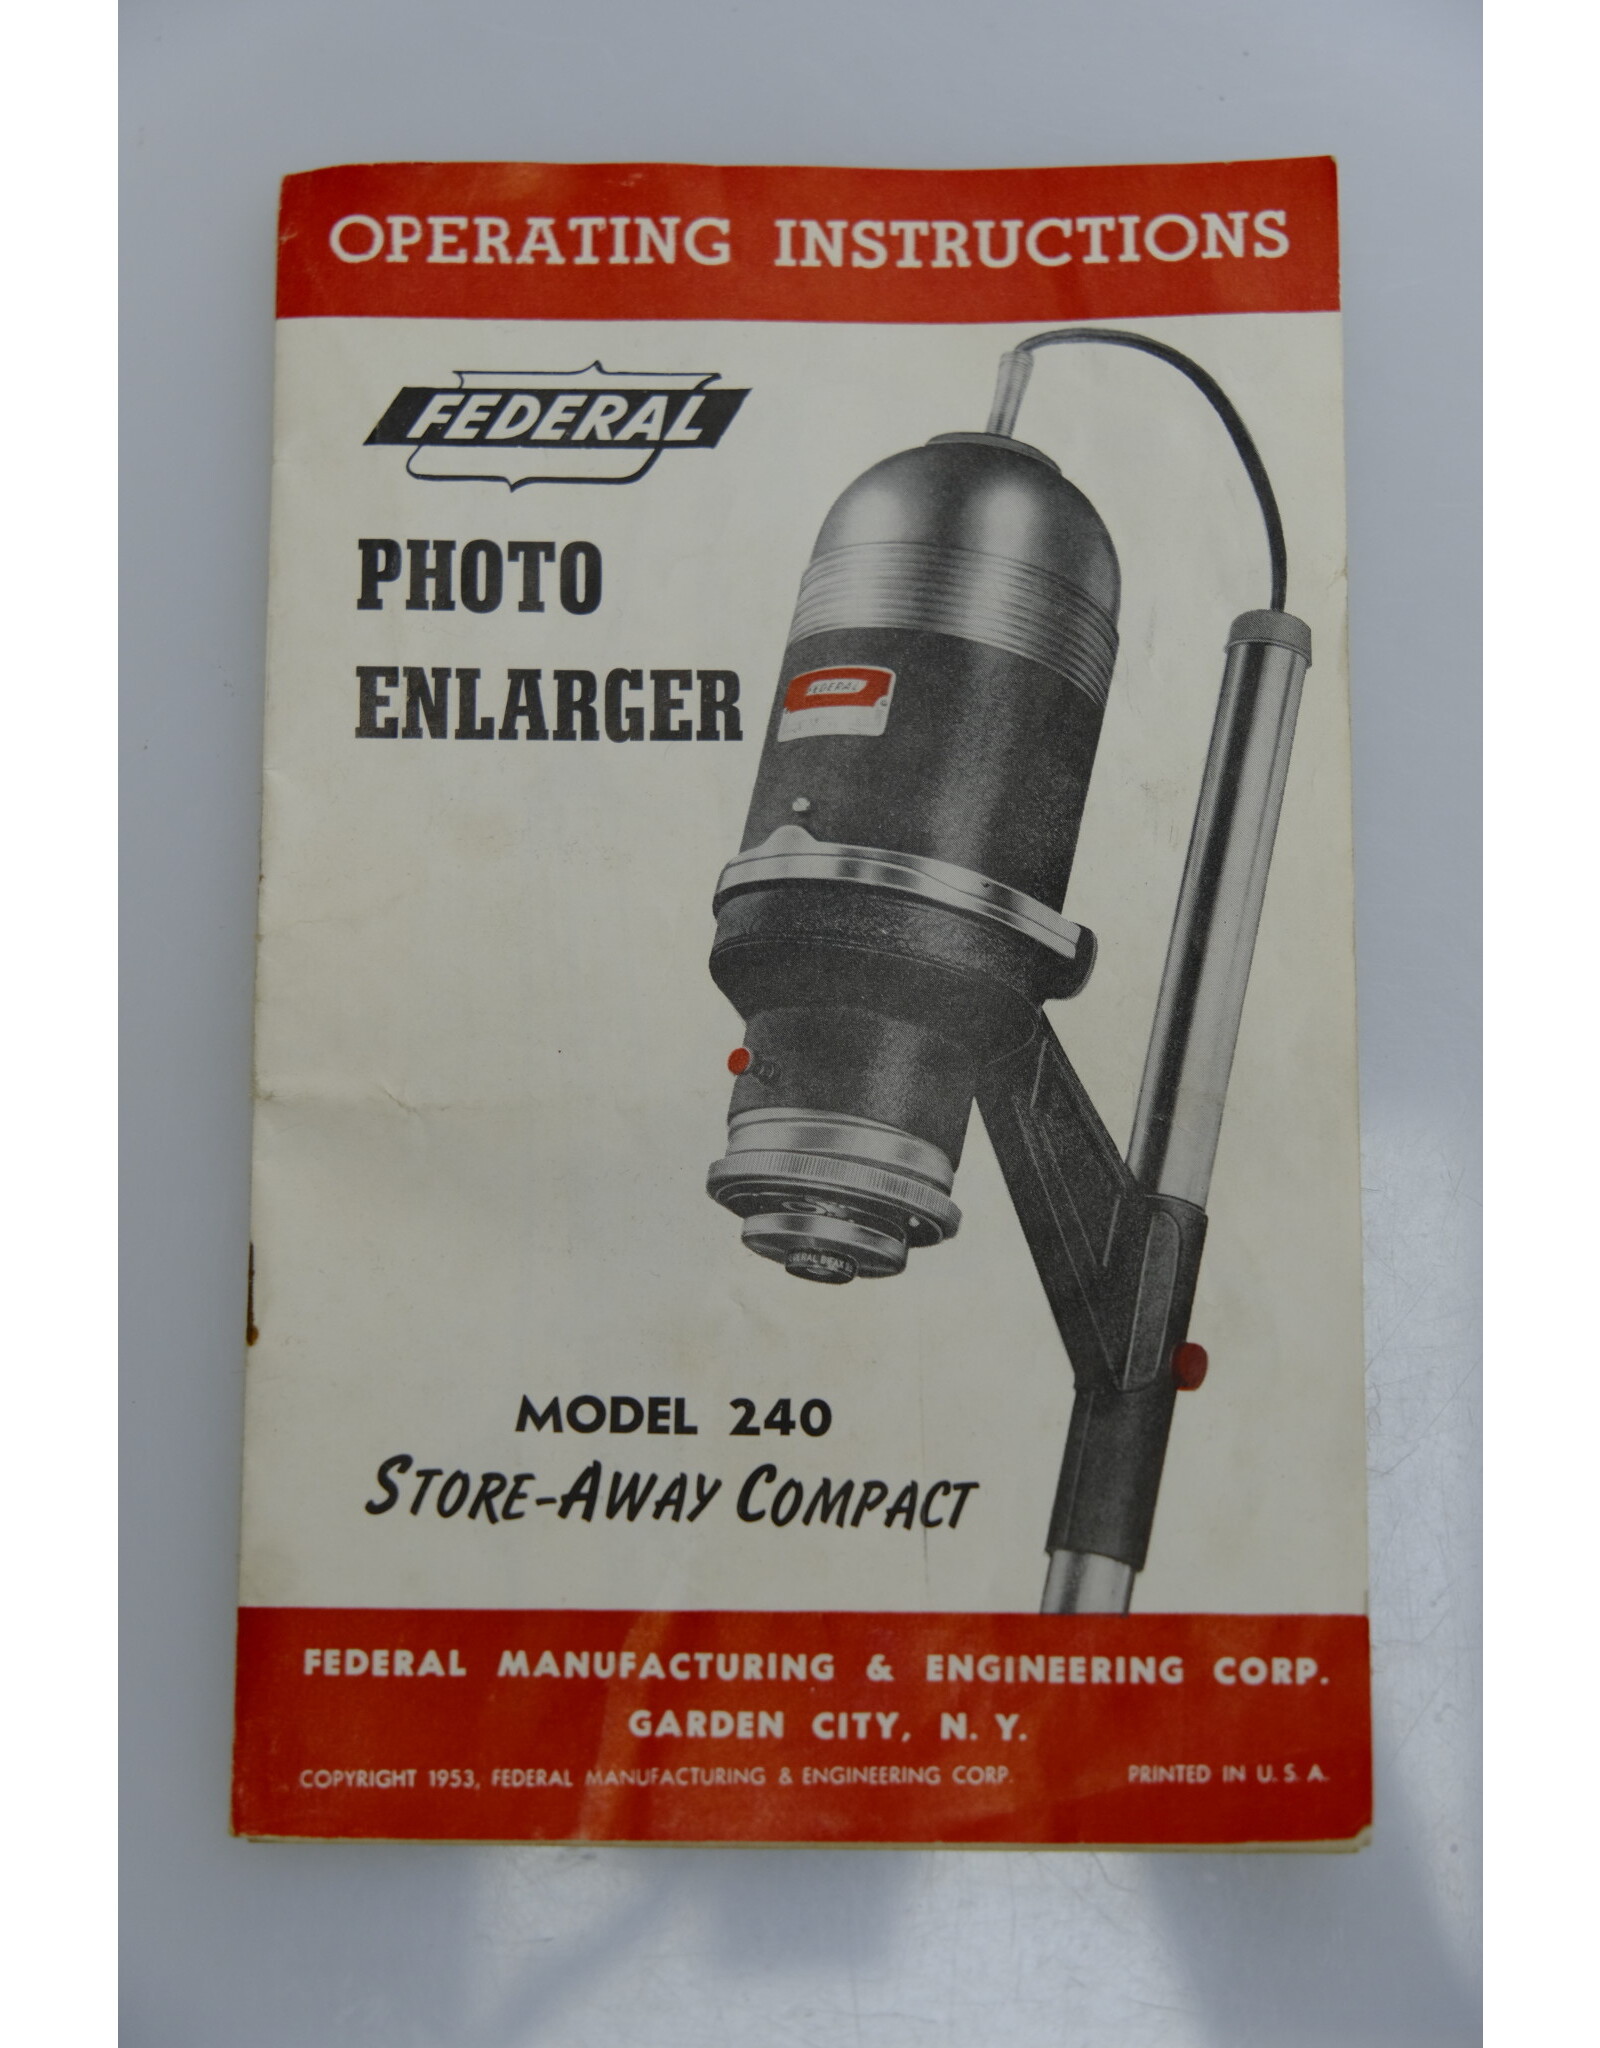 Federal Photo Enlarger Model 240 for 6x7 Medium Format Film